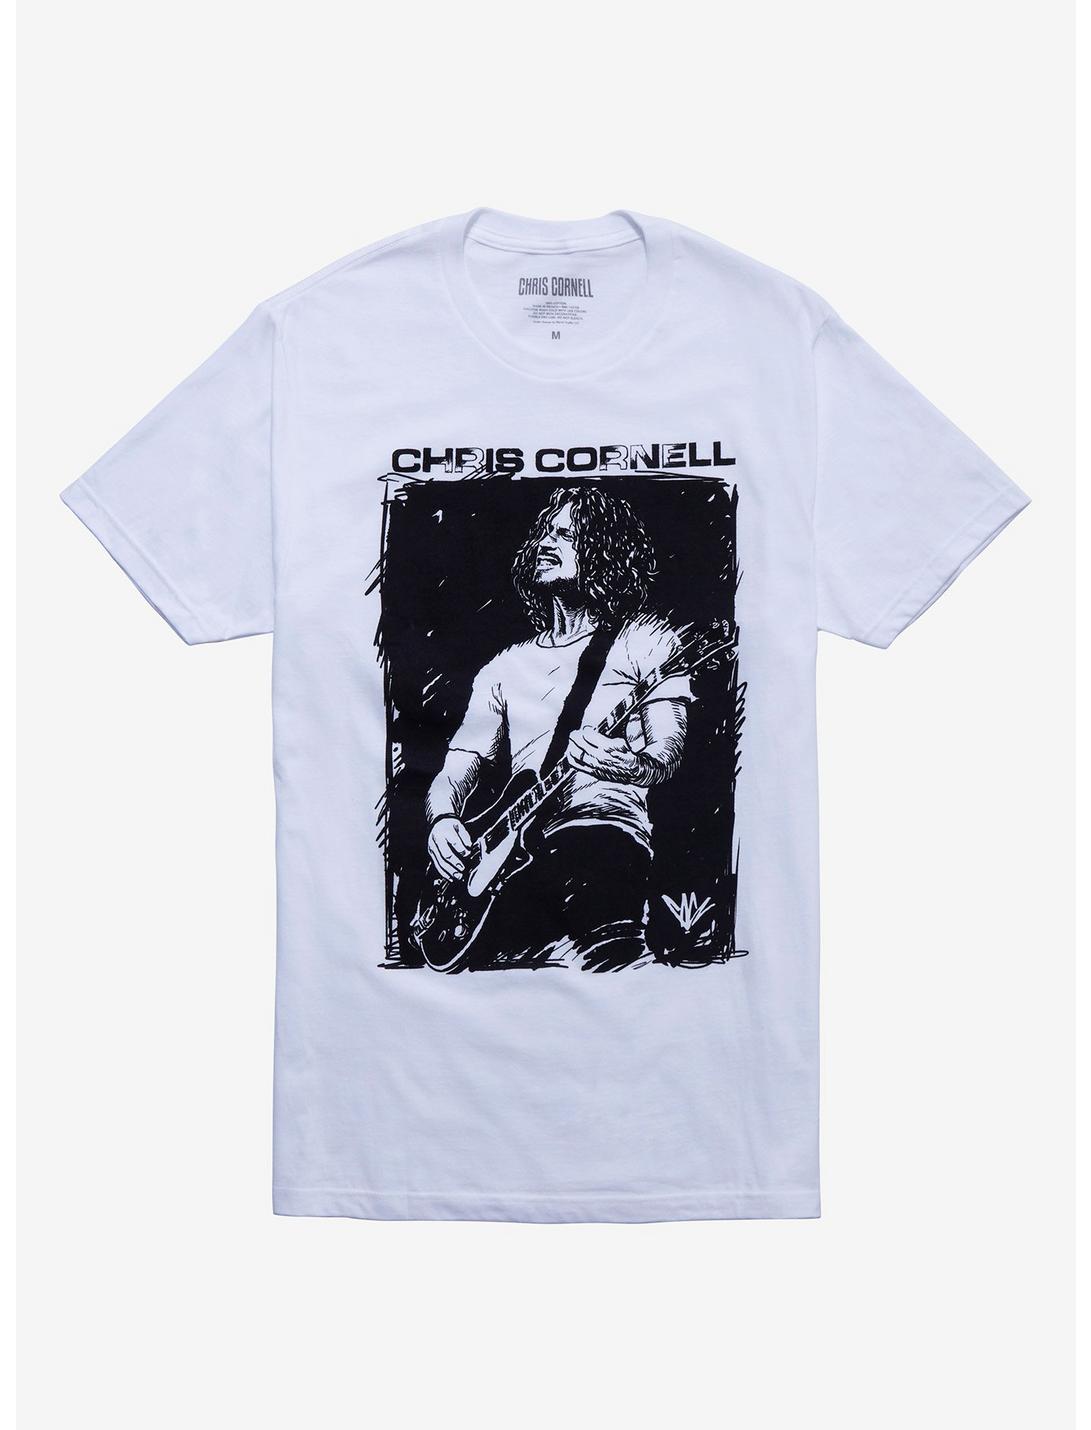 Soundgarden Chris Cornell Boyfriend Fit Girls T-Shirt, GREY, hi-res